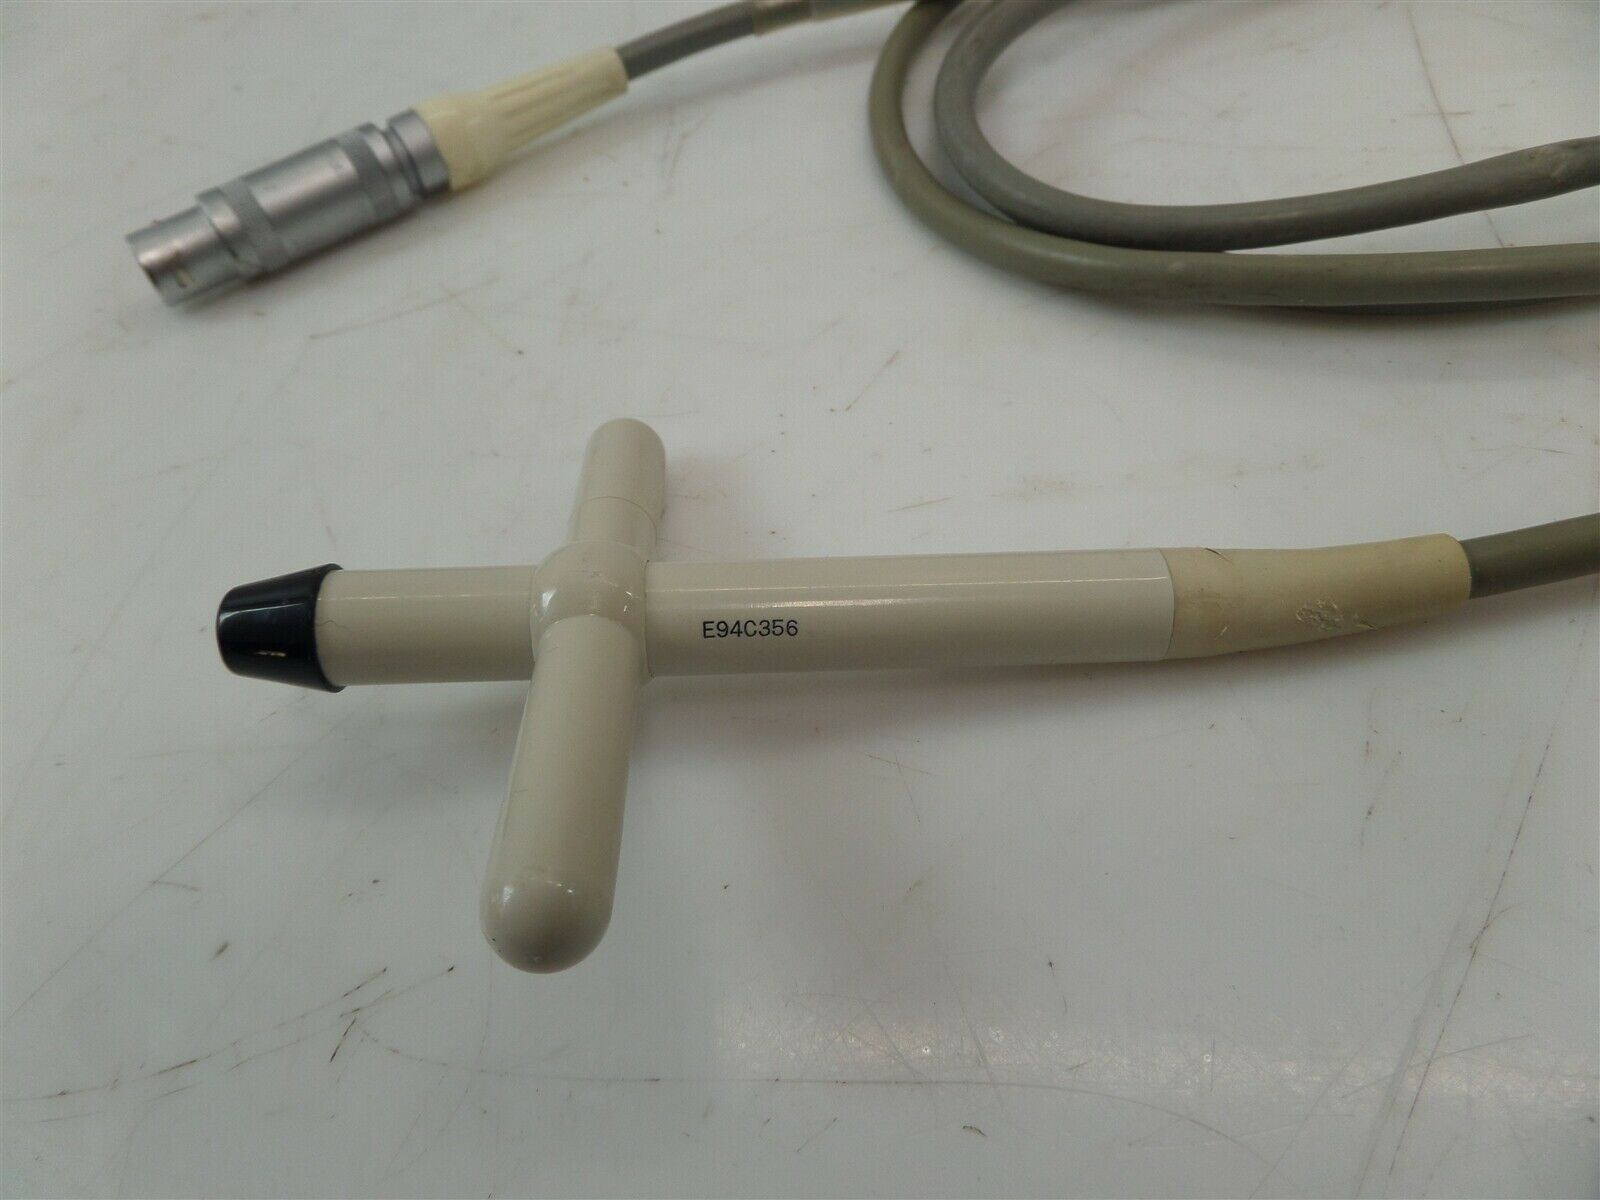 Philips E94C356 5.0MHZ Ultrasound Pencil Probe DIAGNOSTIC ULTRASOUND MACHINES FOR SALE